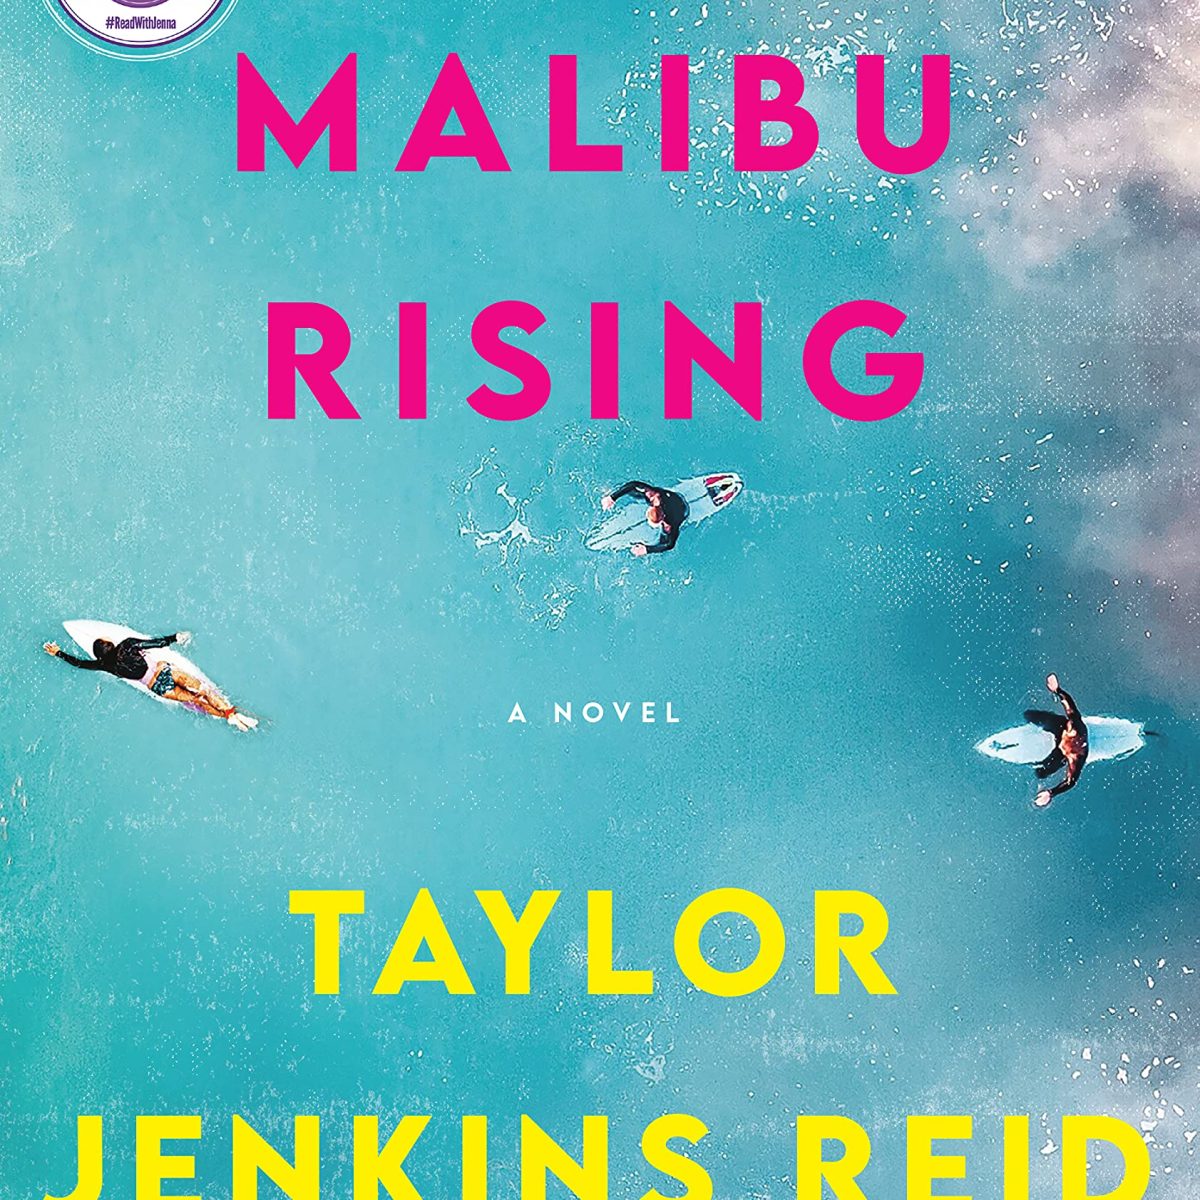 Book 167 – Malibu Rising by Taylor Jenkins Reid